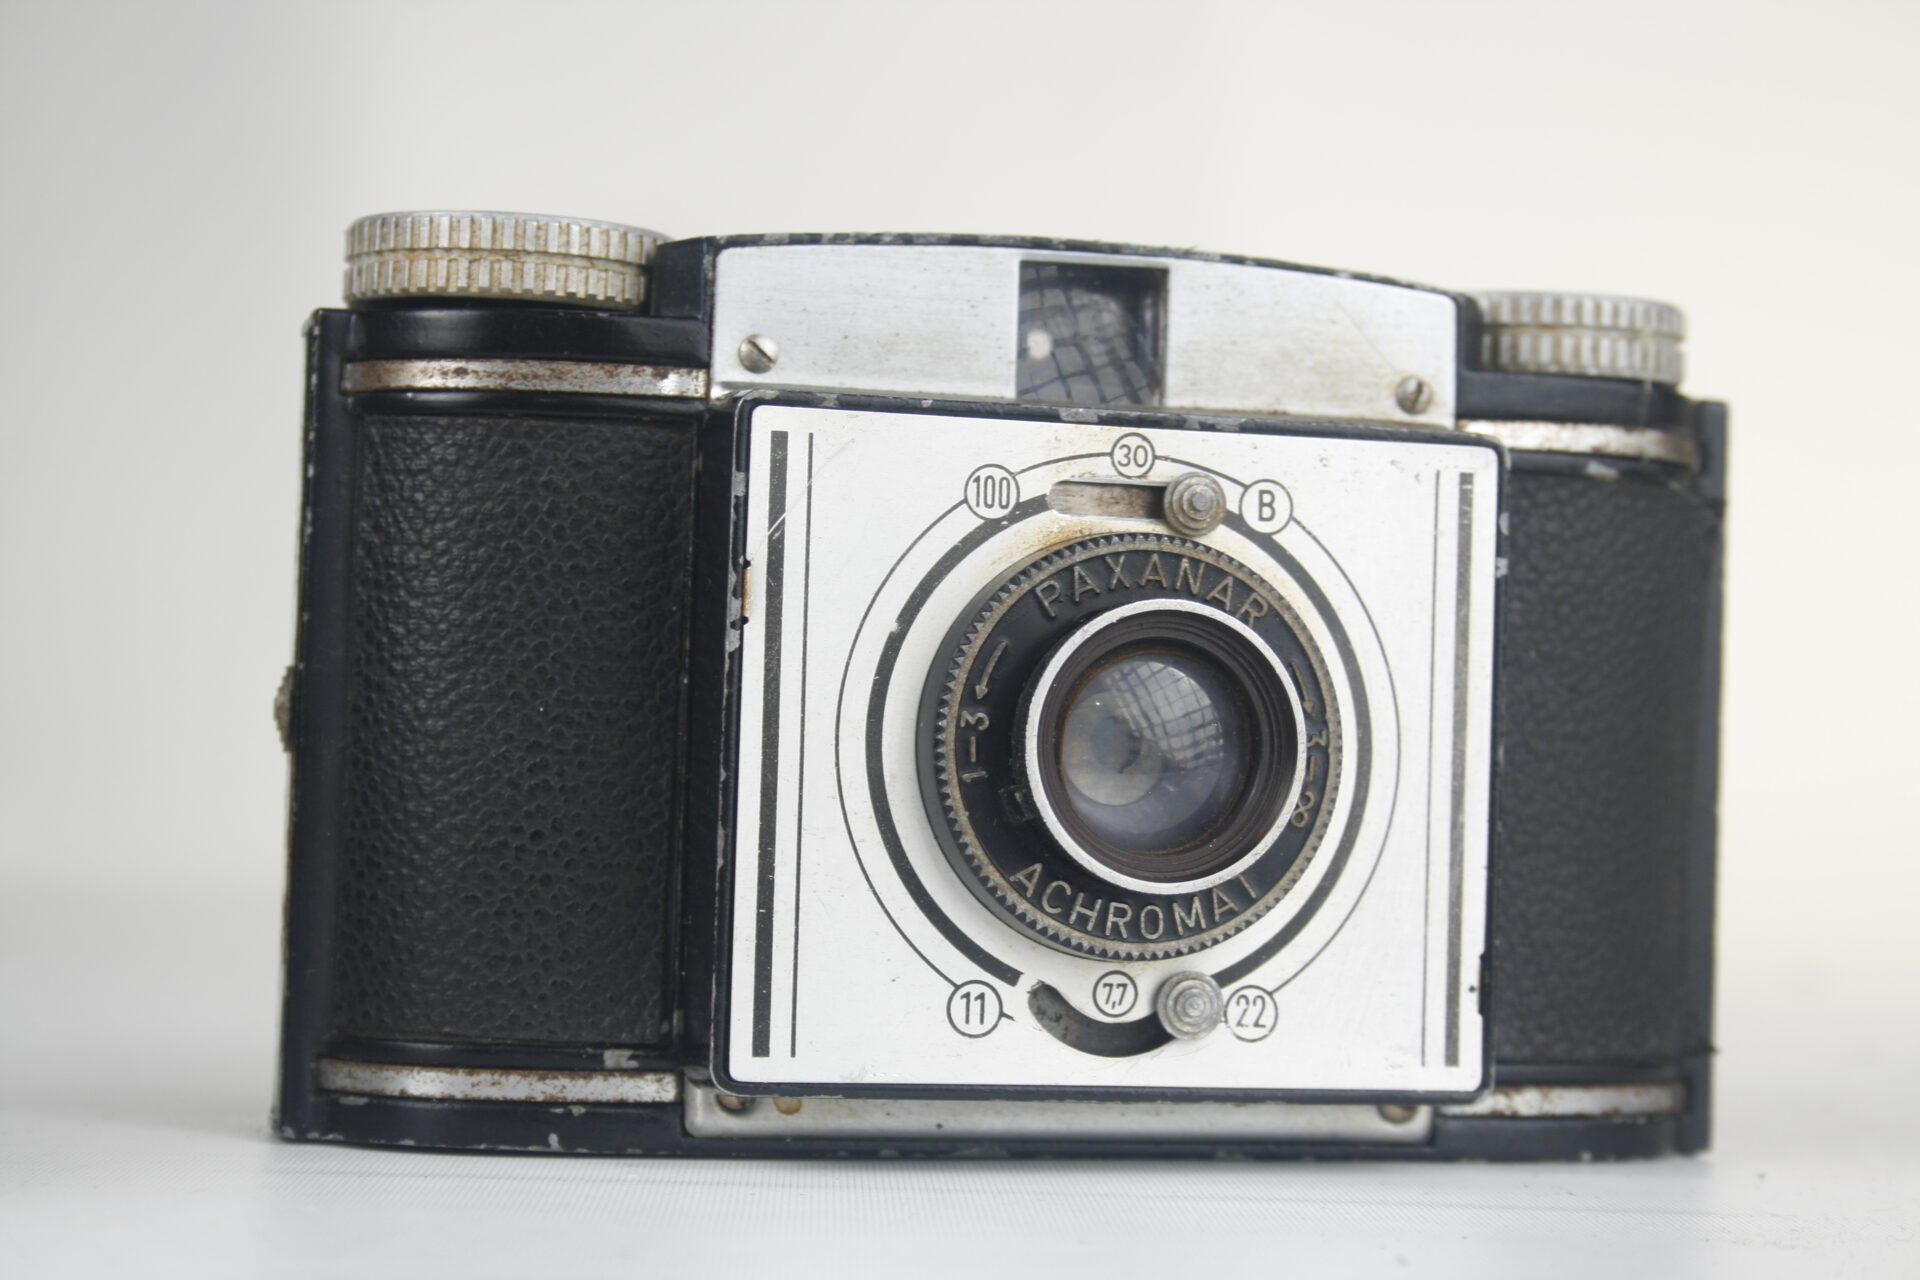 Braun Paxina viewfinder camera. 120 film. 1950-1954. Duitsland